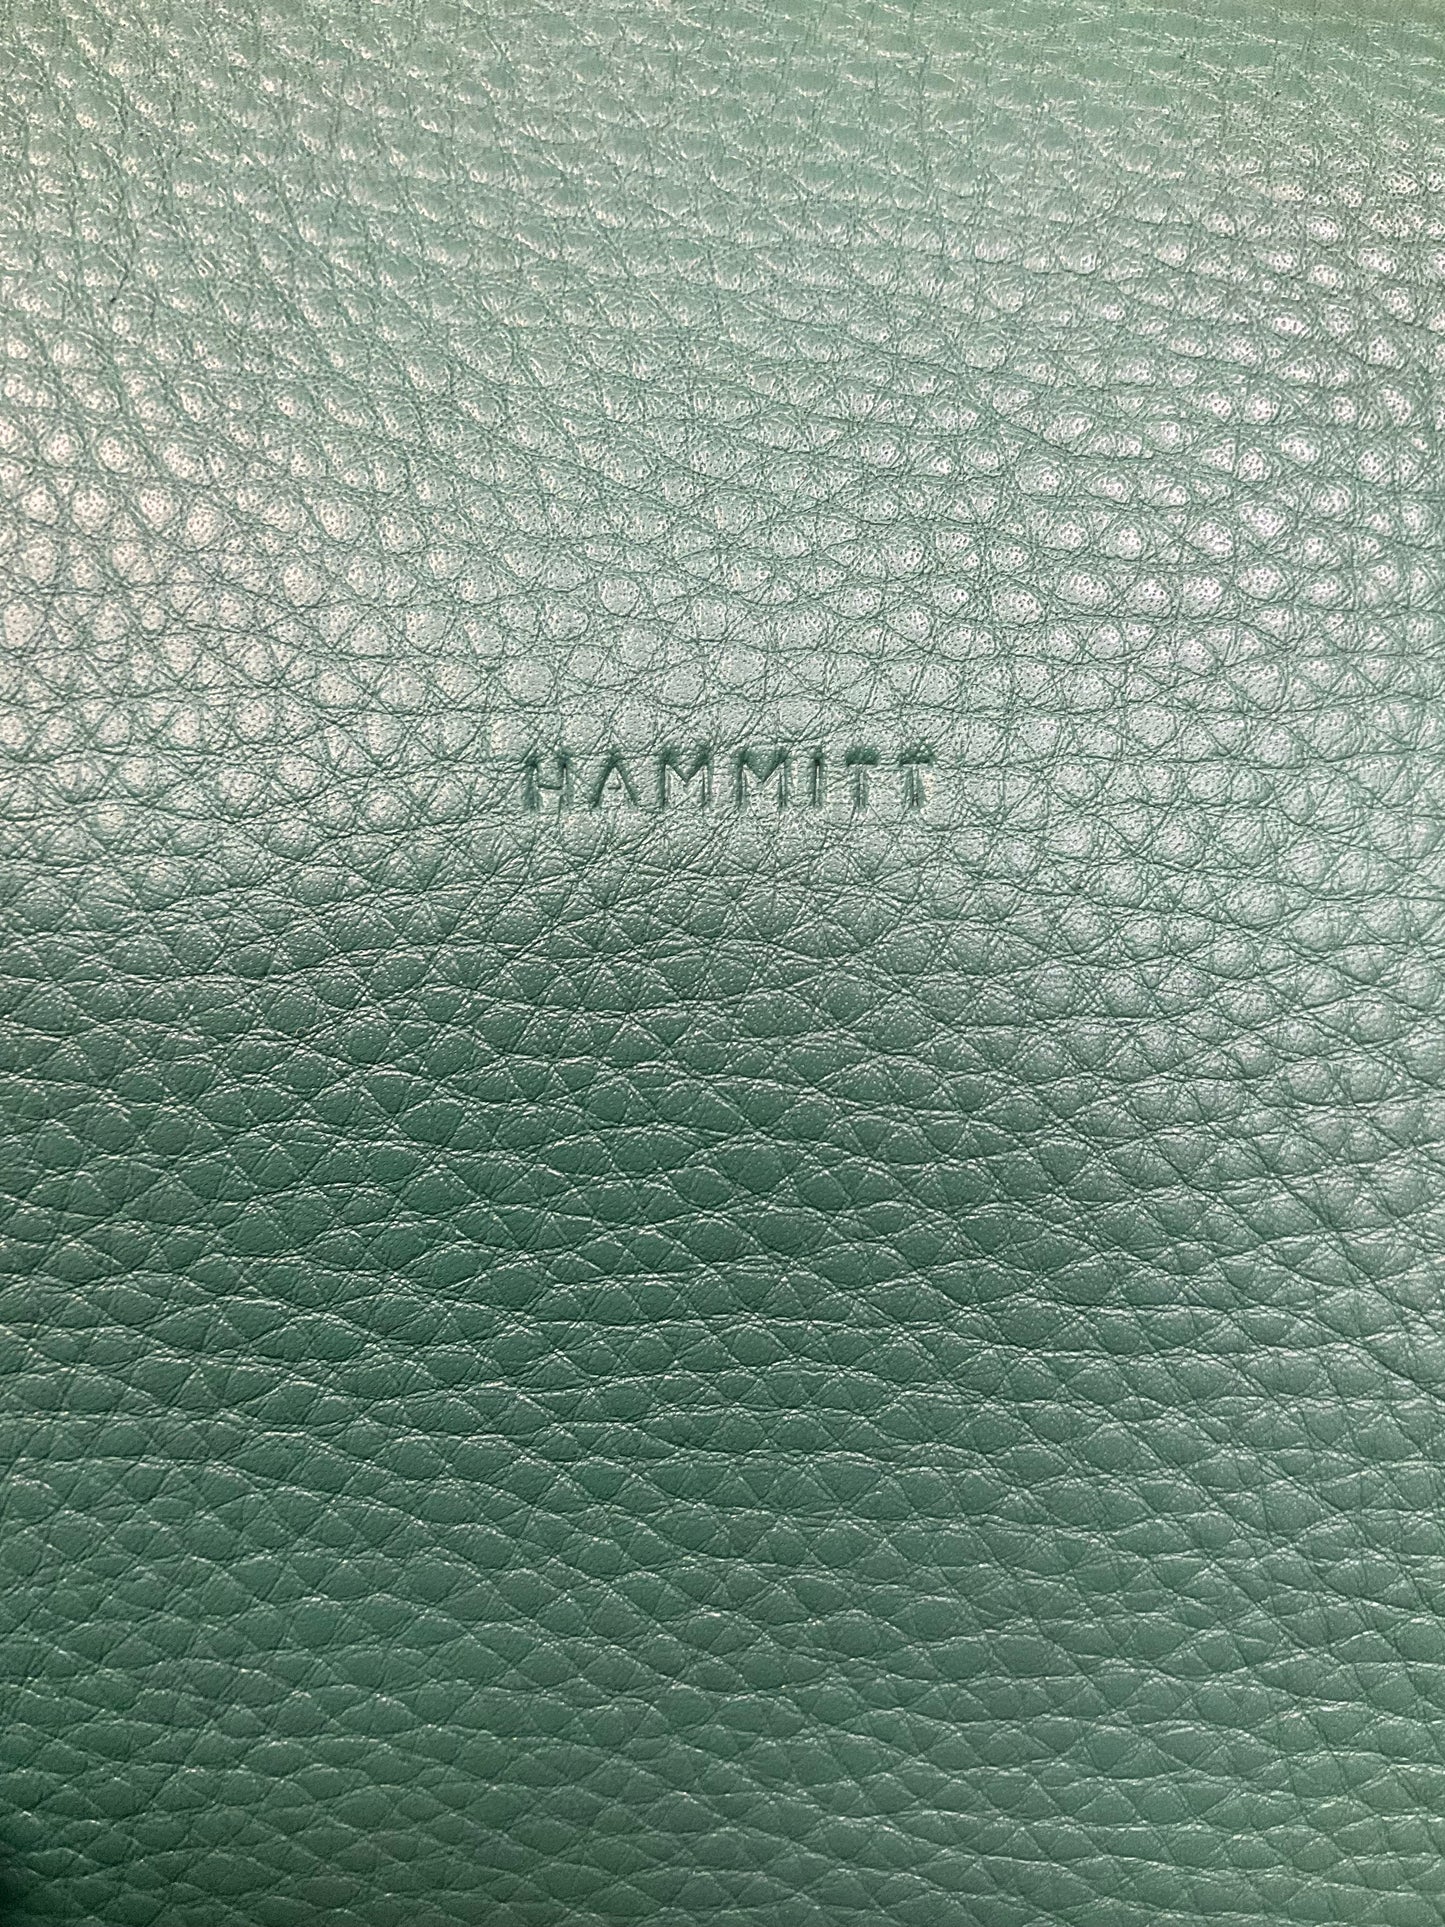 Handbag Designer Hammitt, Size Large